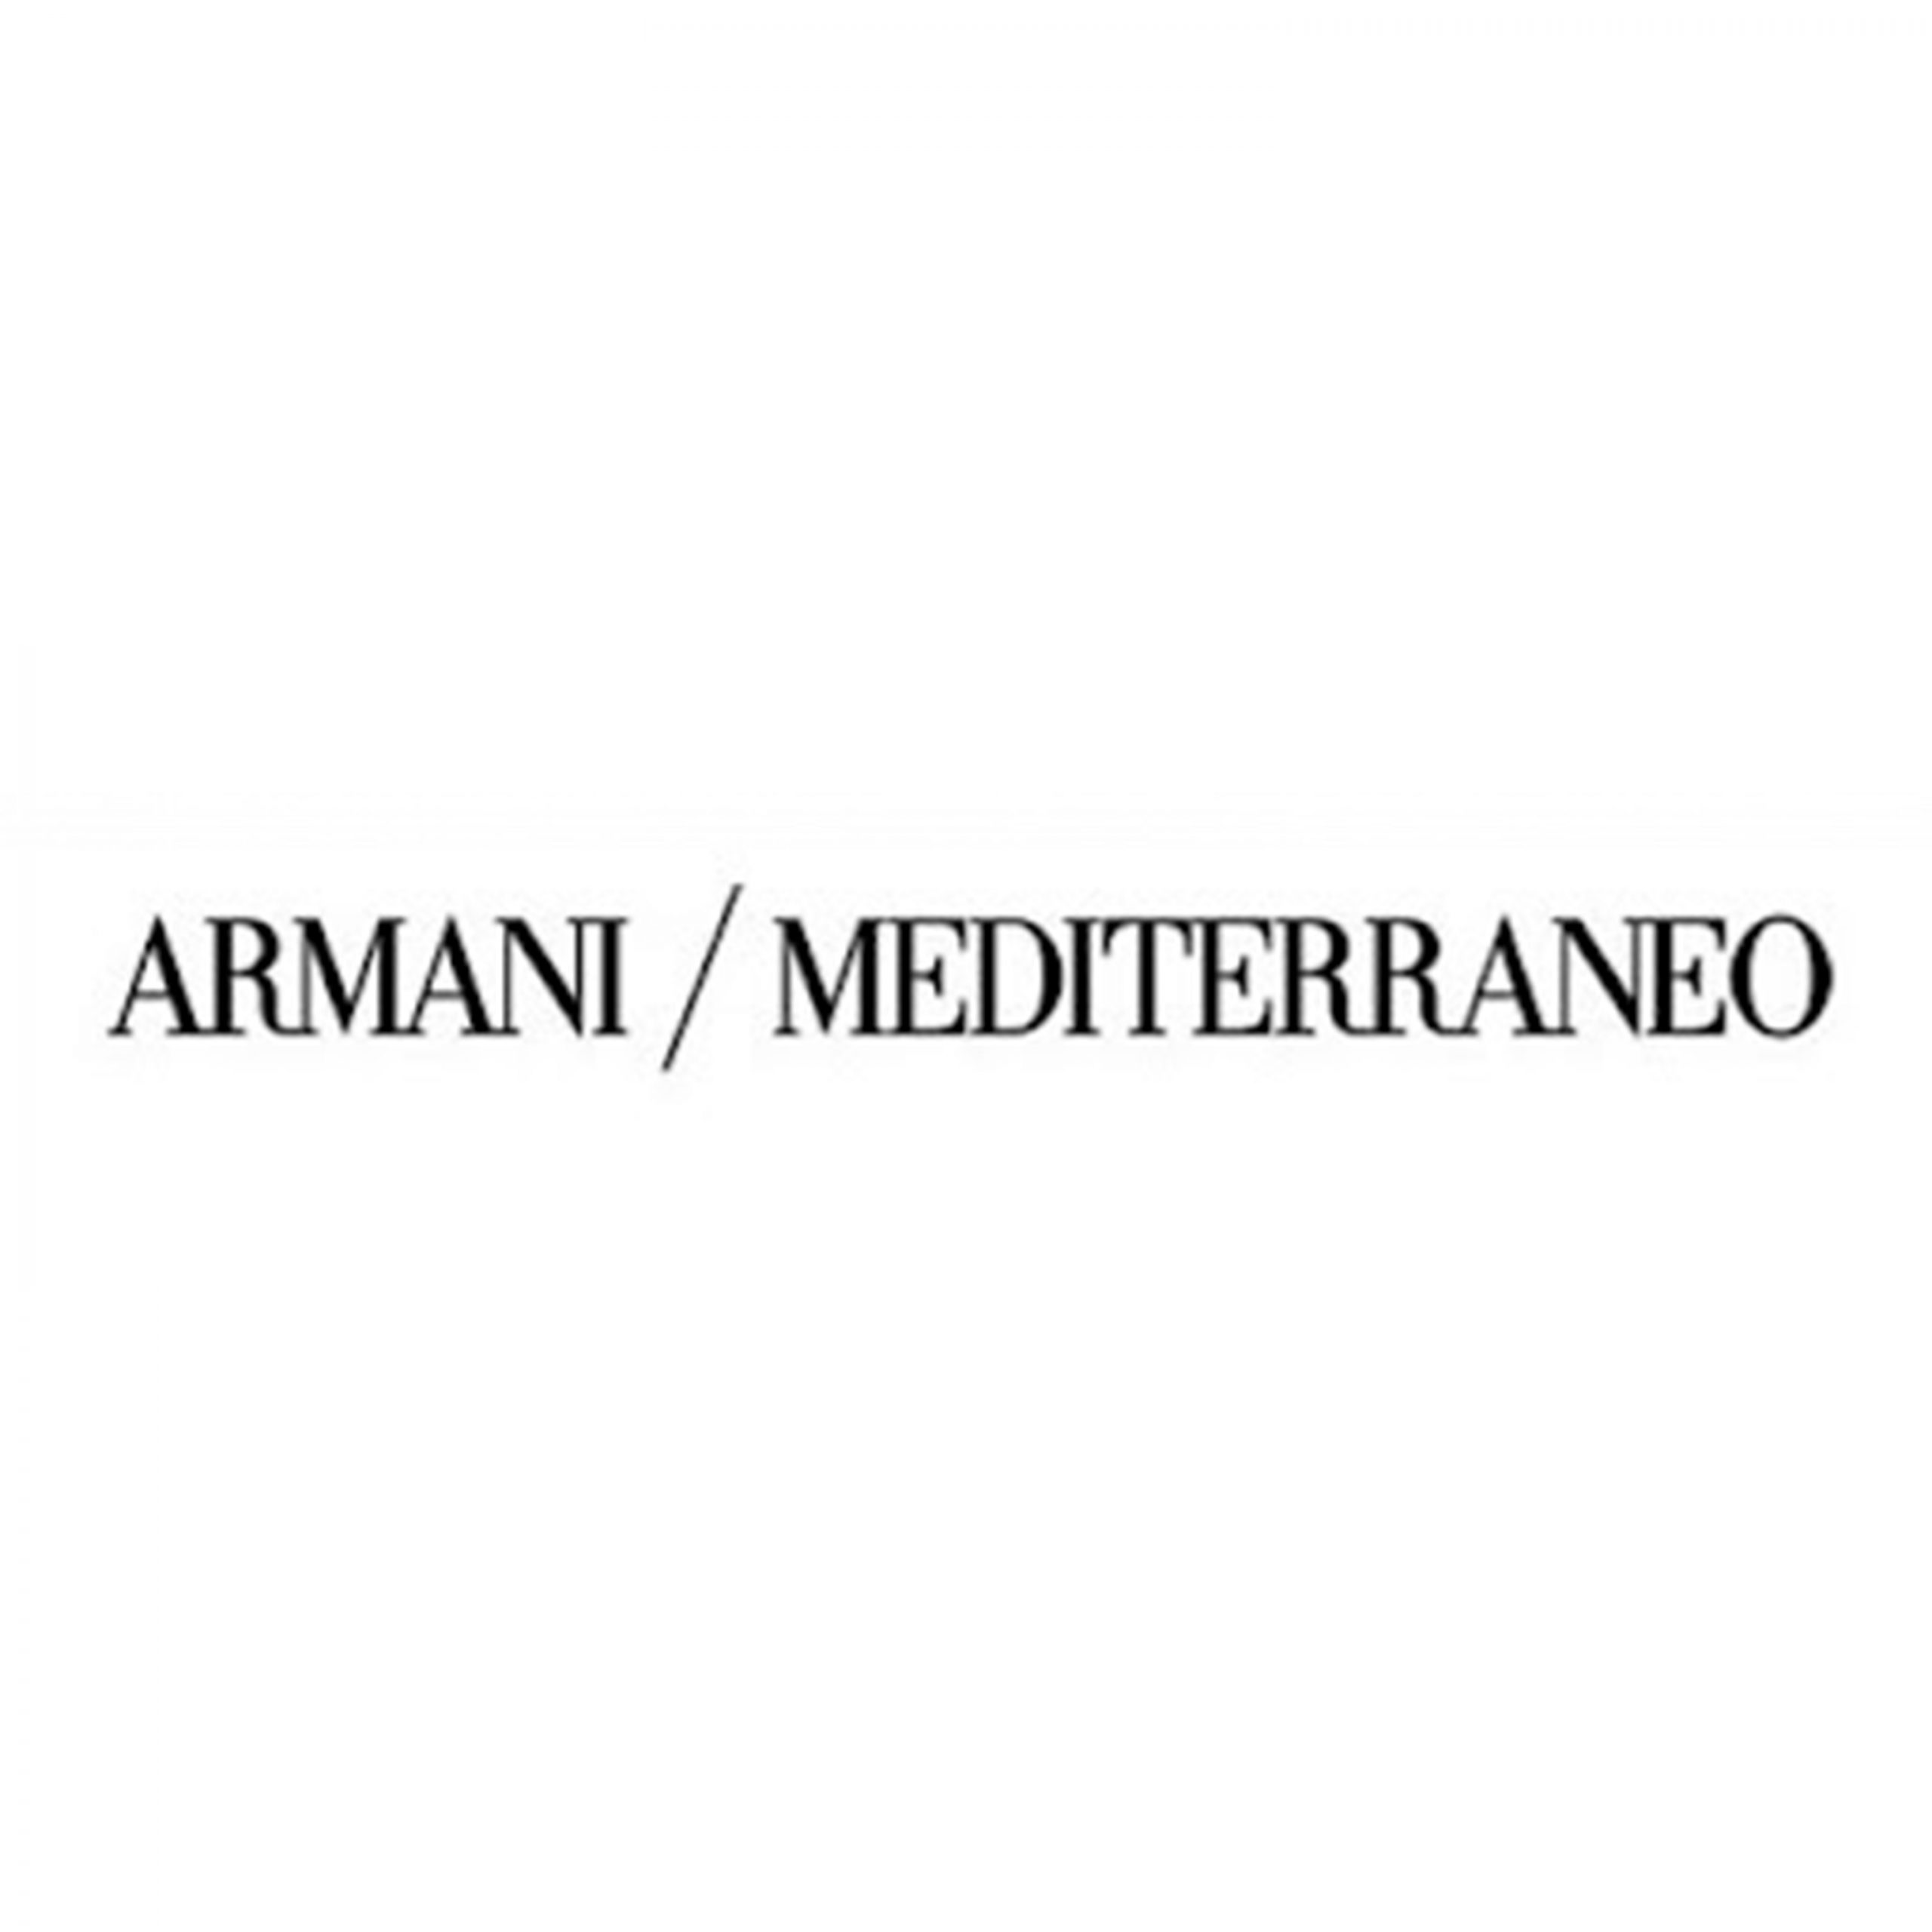 Armani/Mediterraneo - Coming Soon in UAE